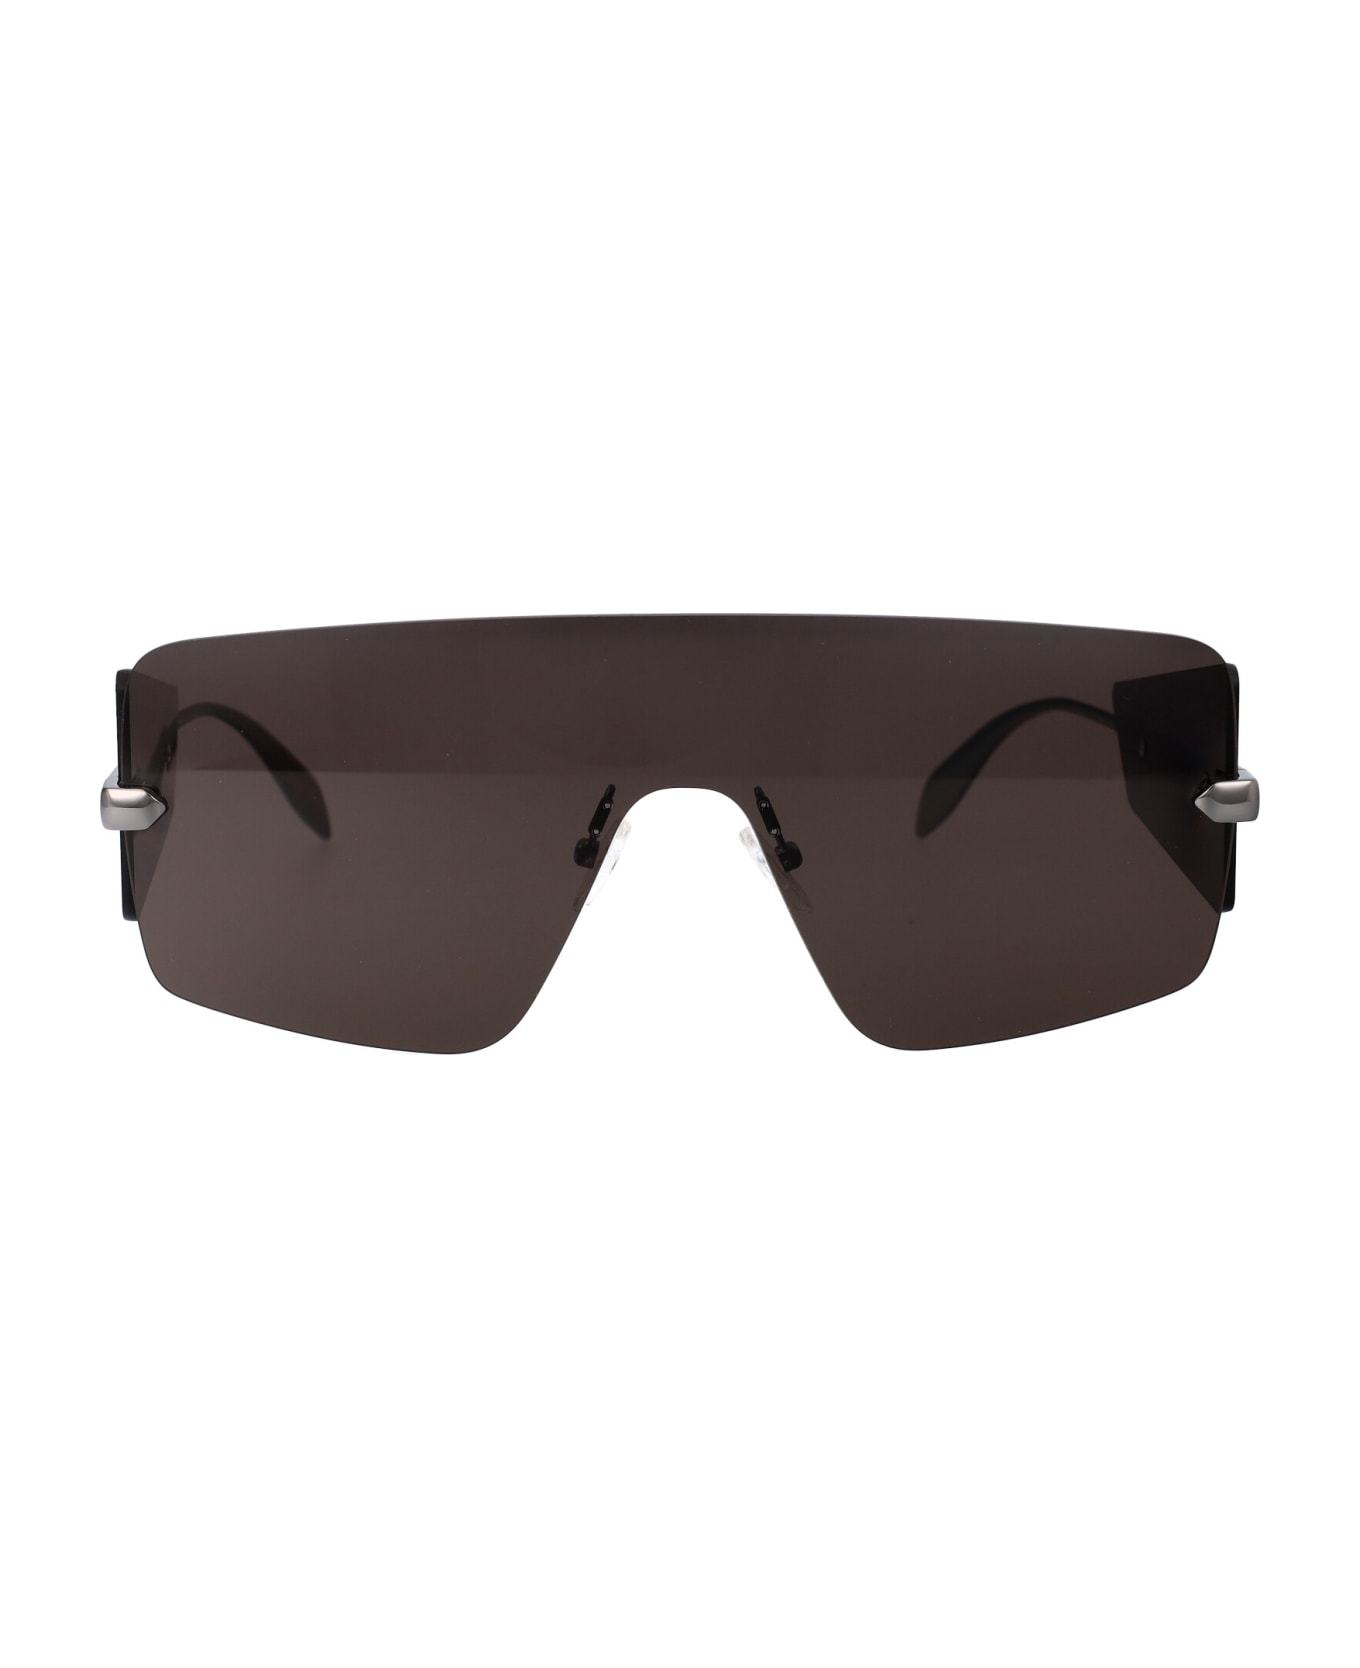 Alexander McQueen Eyewear Am0460s Sunglasses - 001 RUTHENIUM RUTHENIUM GREY